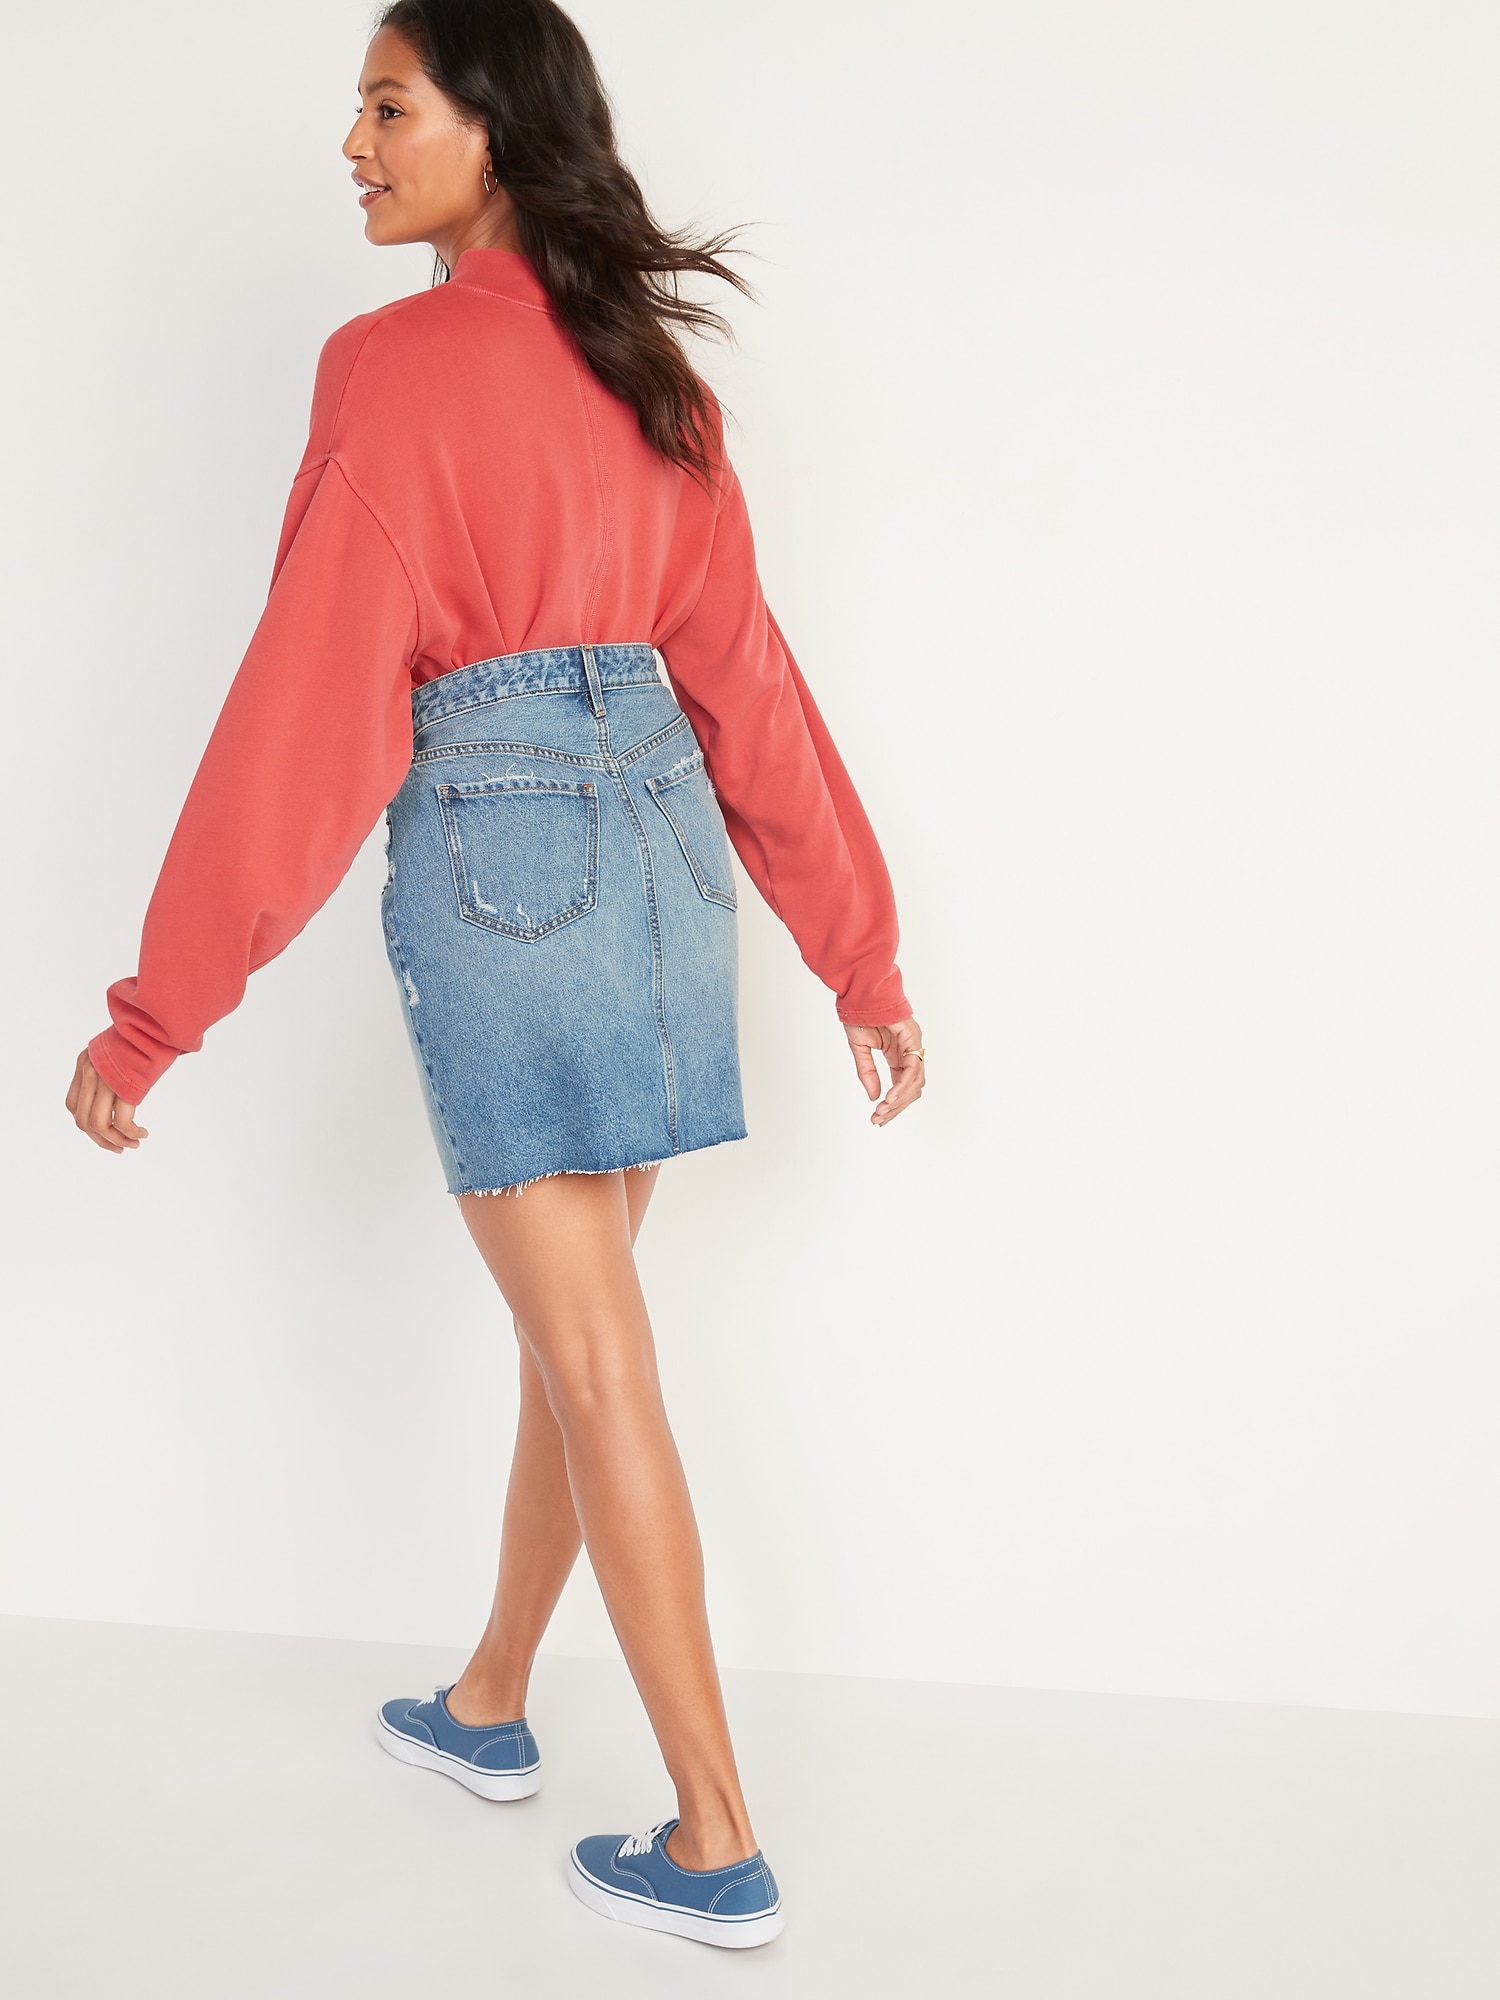 Higher High-Waisted Button-Fly O.G. Straight Mini Jean Skirt for Women ...